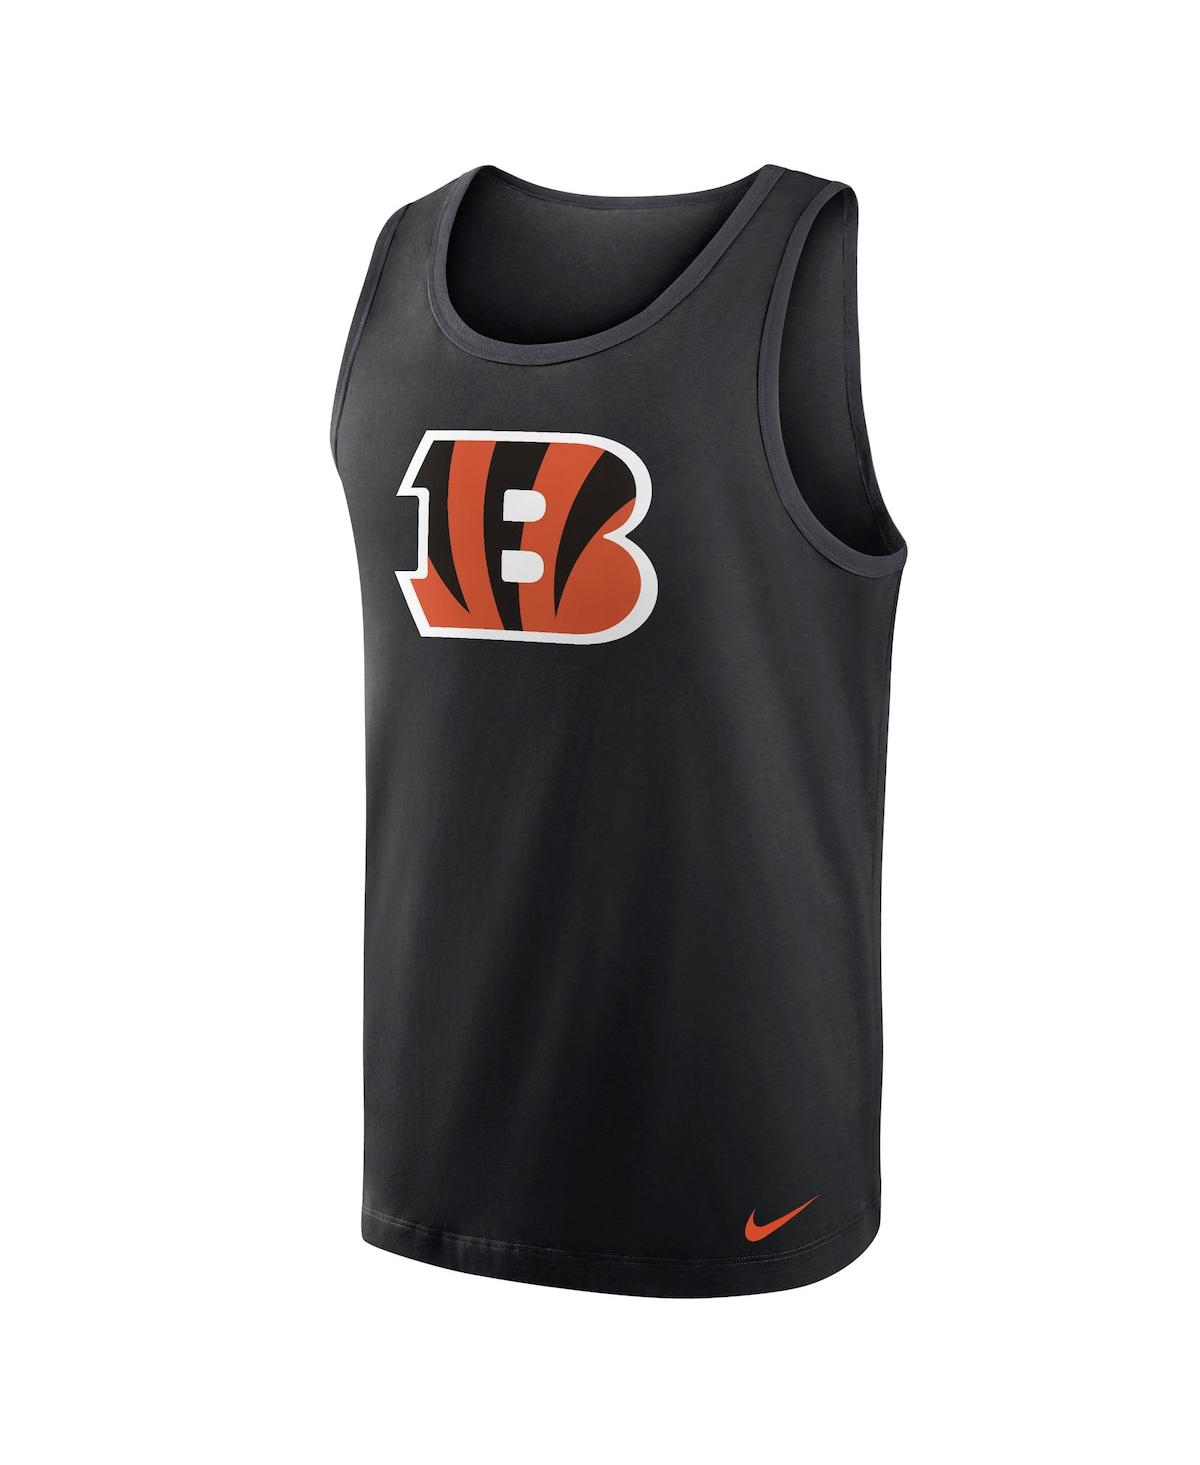 Shop Nike Men's  Black Cincinnati Bengals Tri-blend Tank Top